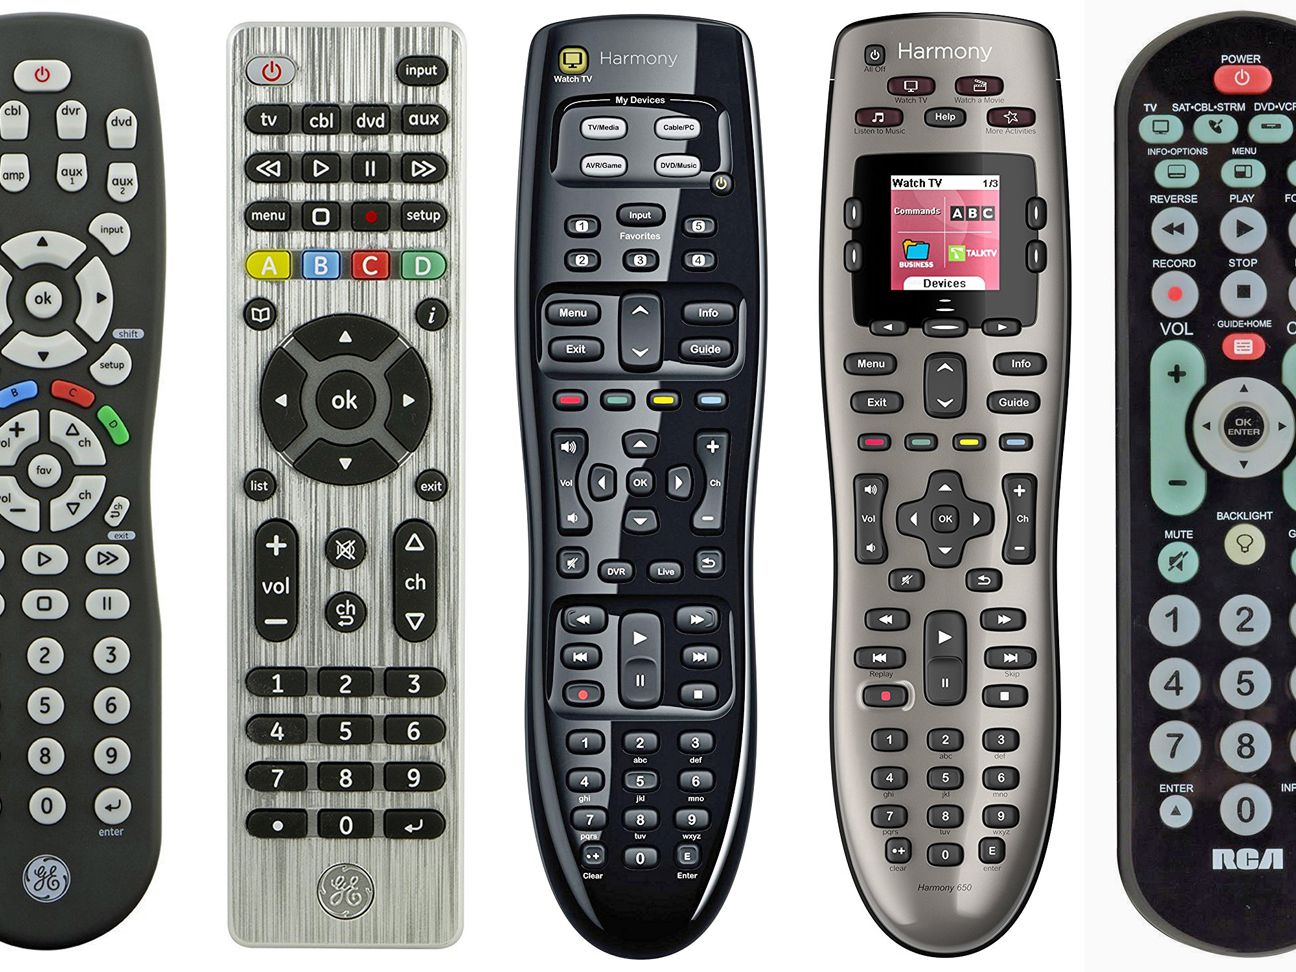 انواع کنترل تلویزیون,انواع کنترل تلویزیون چیست,انواع کنترل تلویزیون,